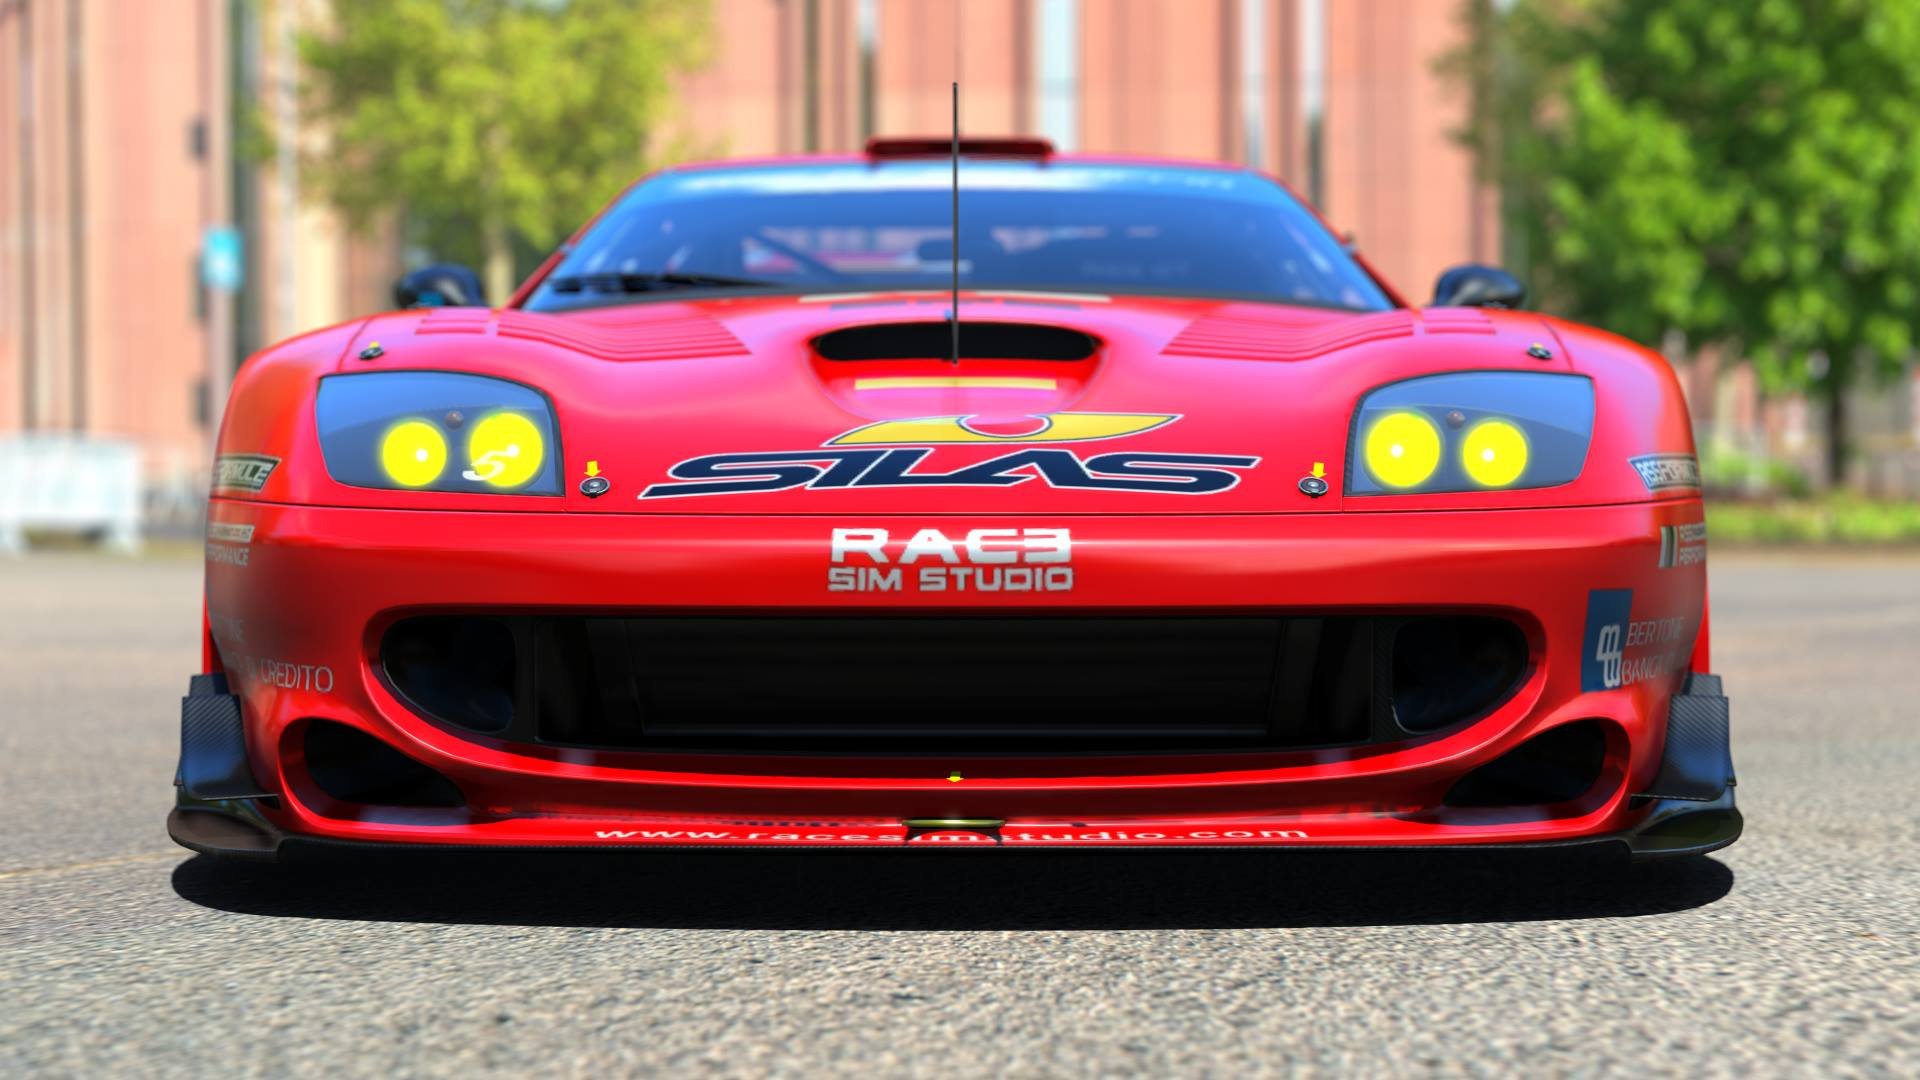 More information about "Assetto Corsa: RSS GT1 Championship by Race Sim Studio disponibile il 23 !"